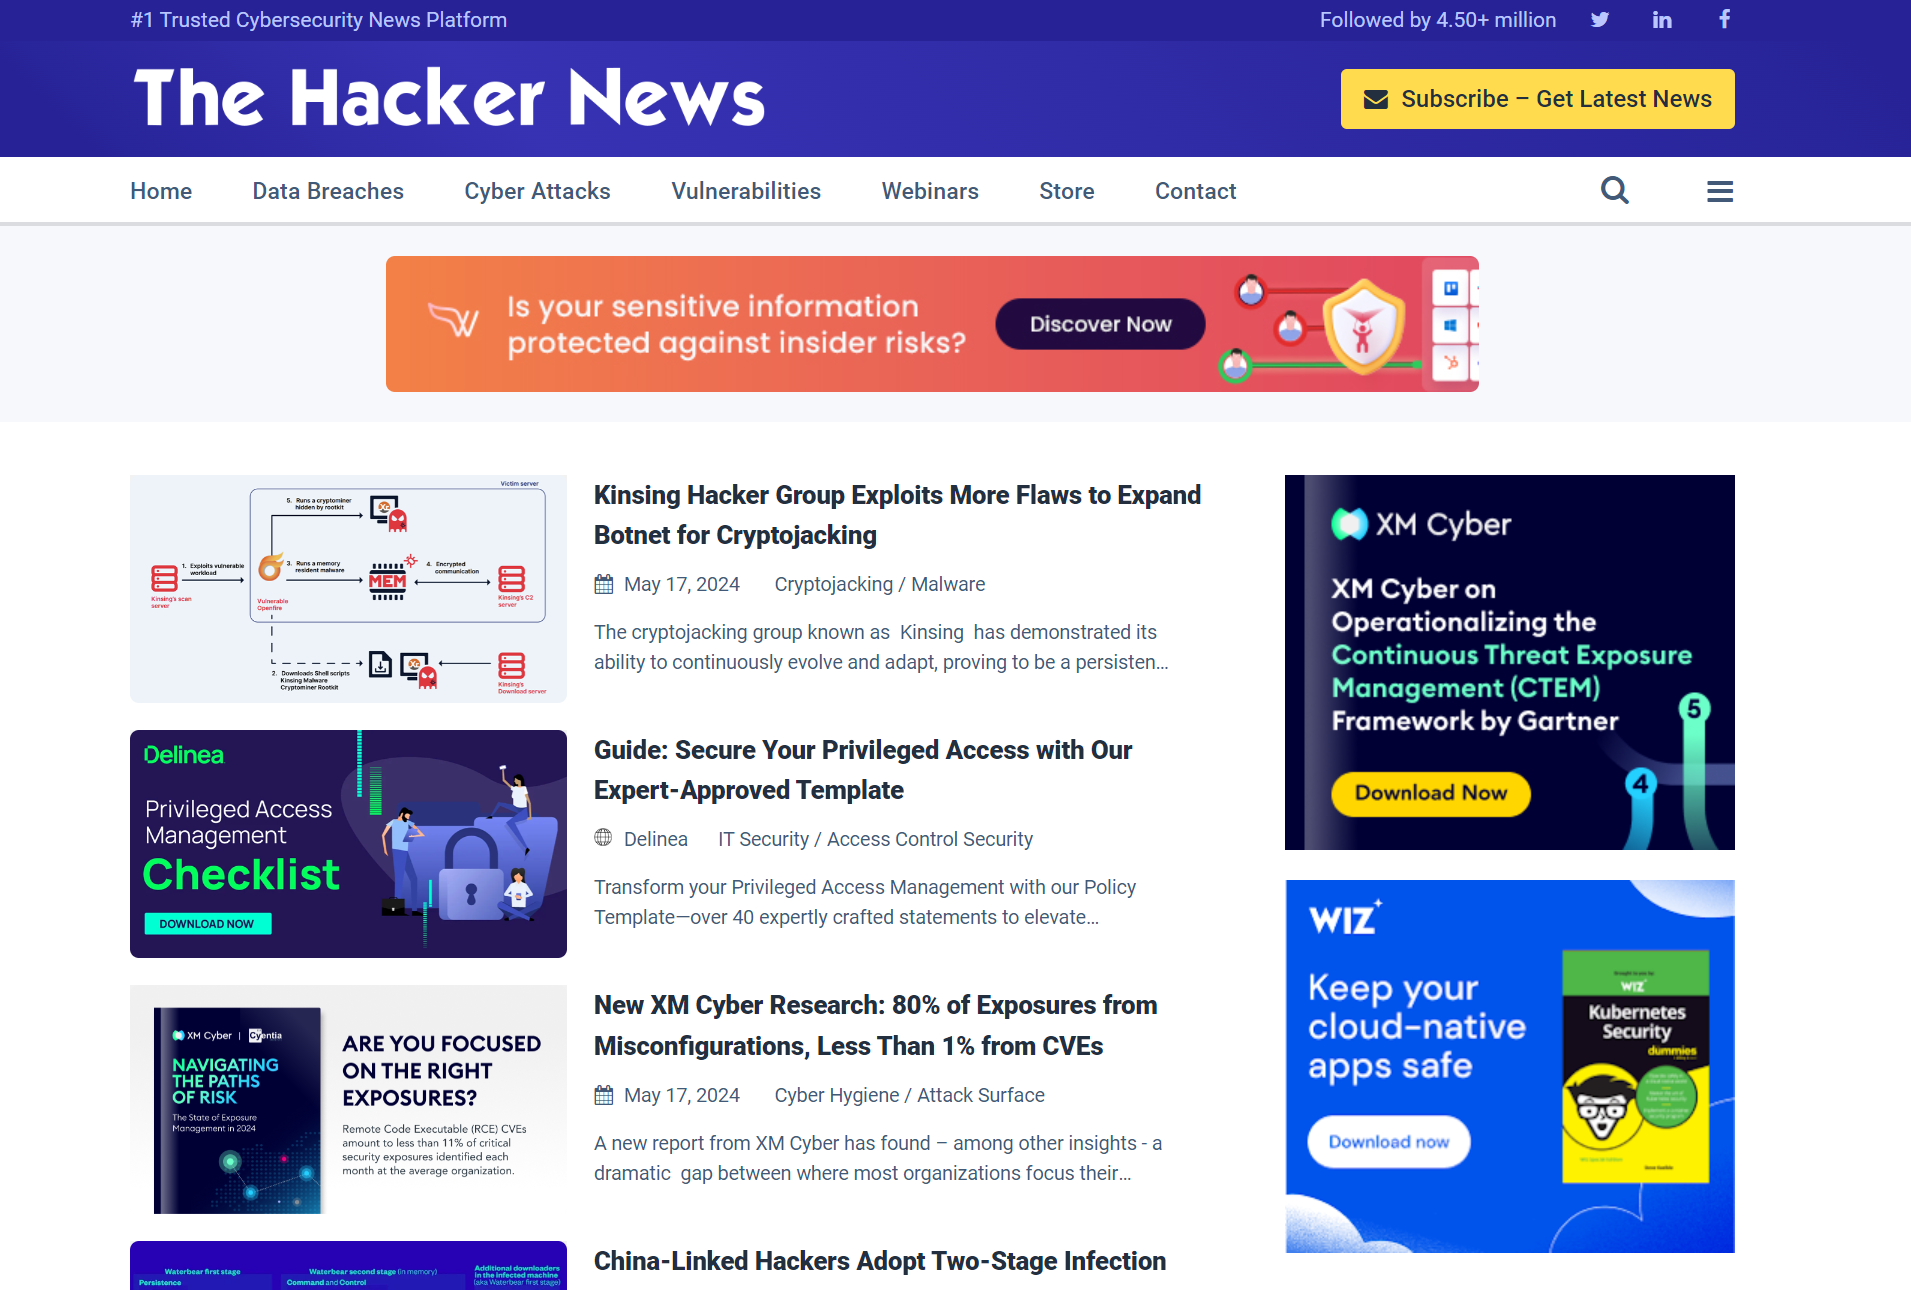 The Hacker News Homepage